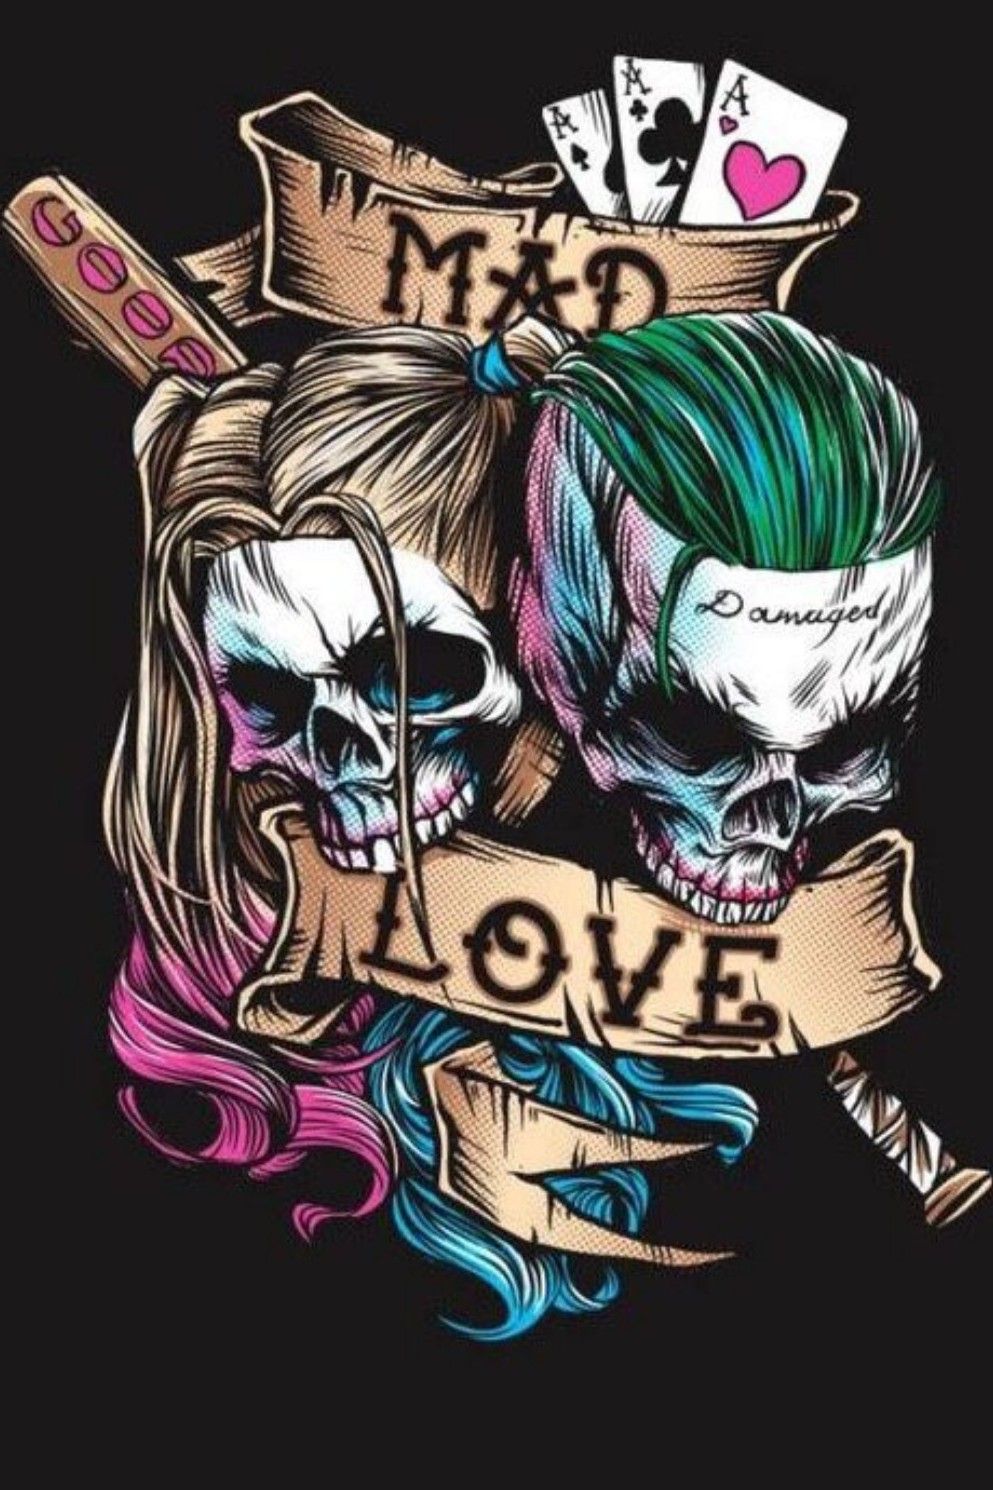 Joker and harley quinn tattoo drawings